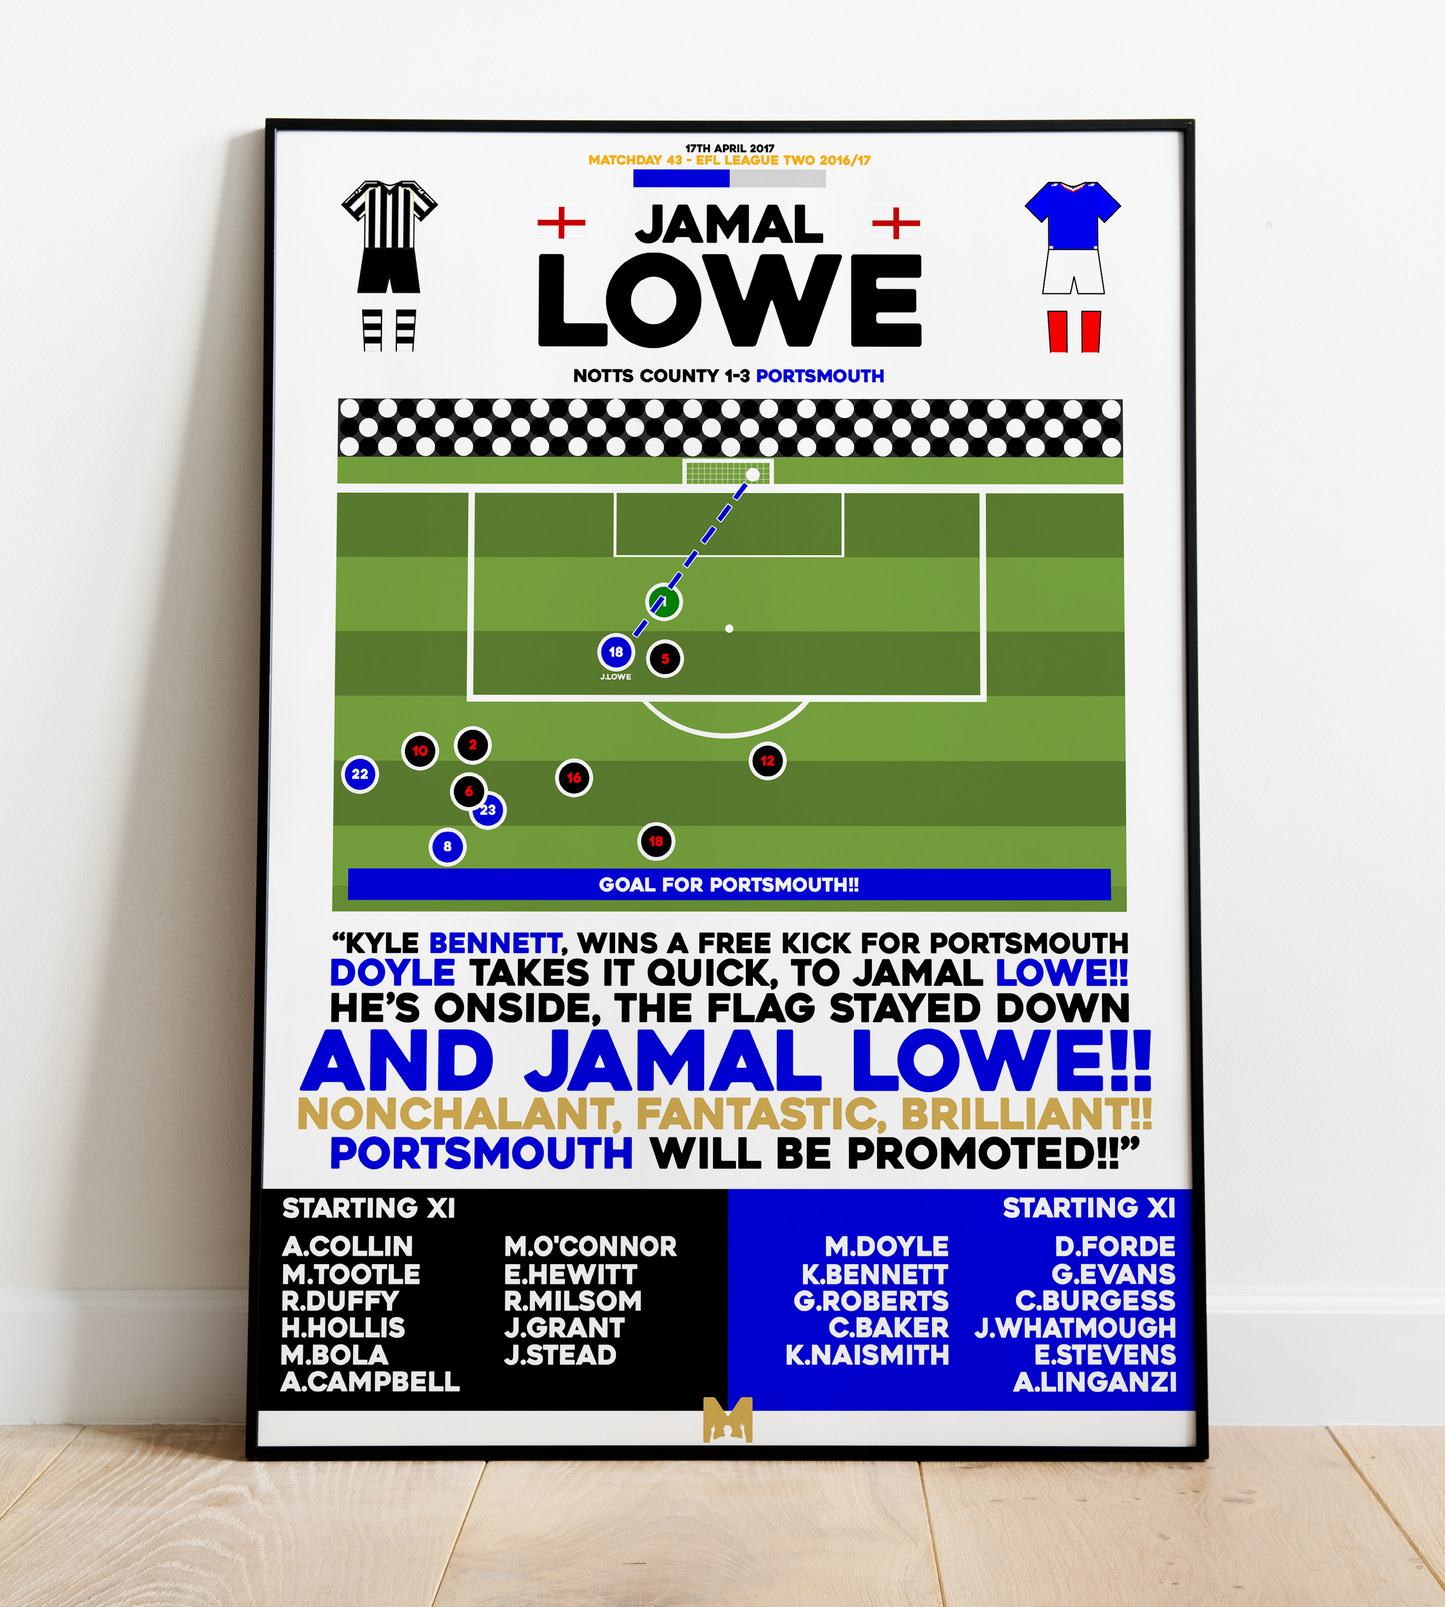 Jamal Lowe Goal vs Notts County - EFL League Two 2016/17 - Portsmouth